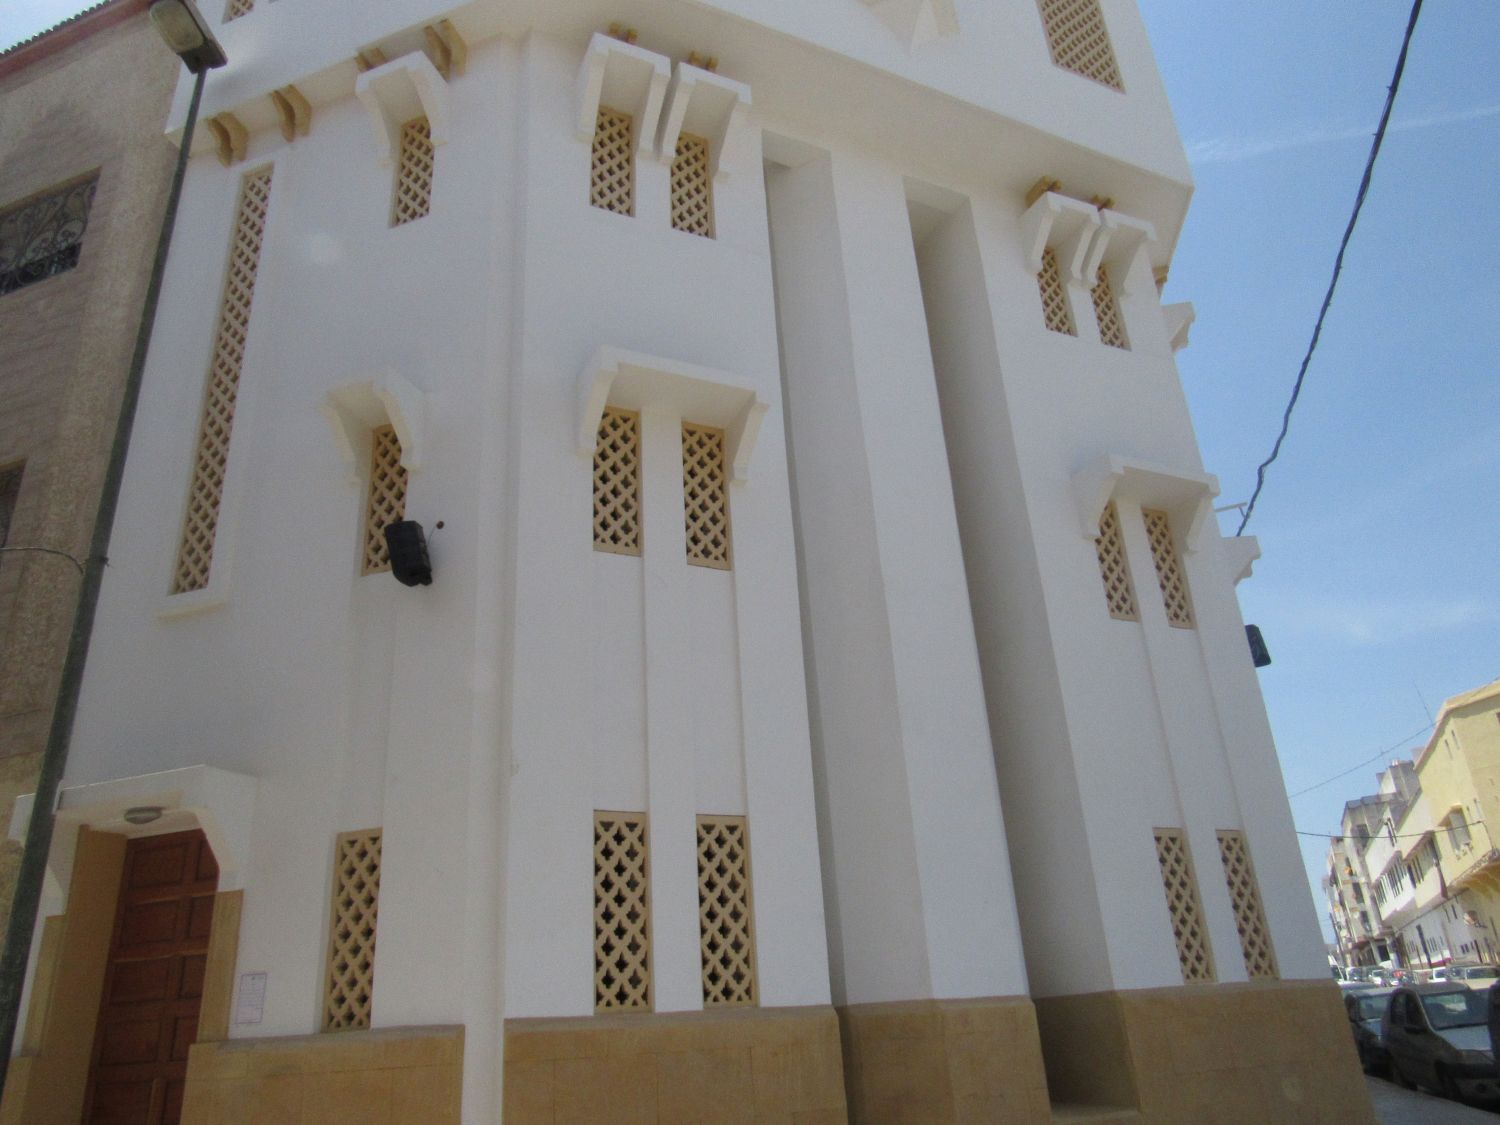 Exterior view, mosque exterior walls and windows.